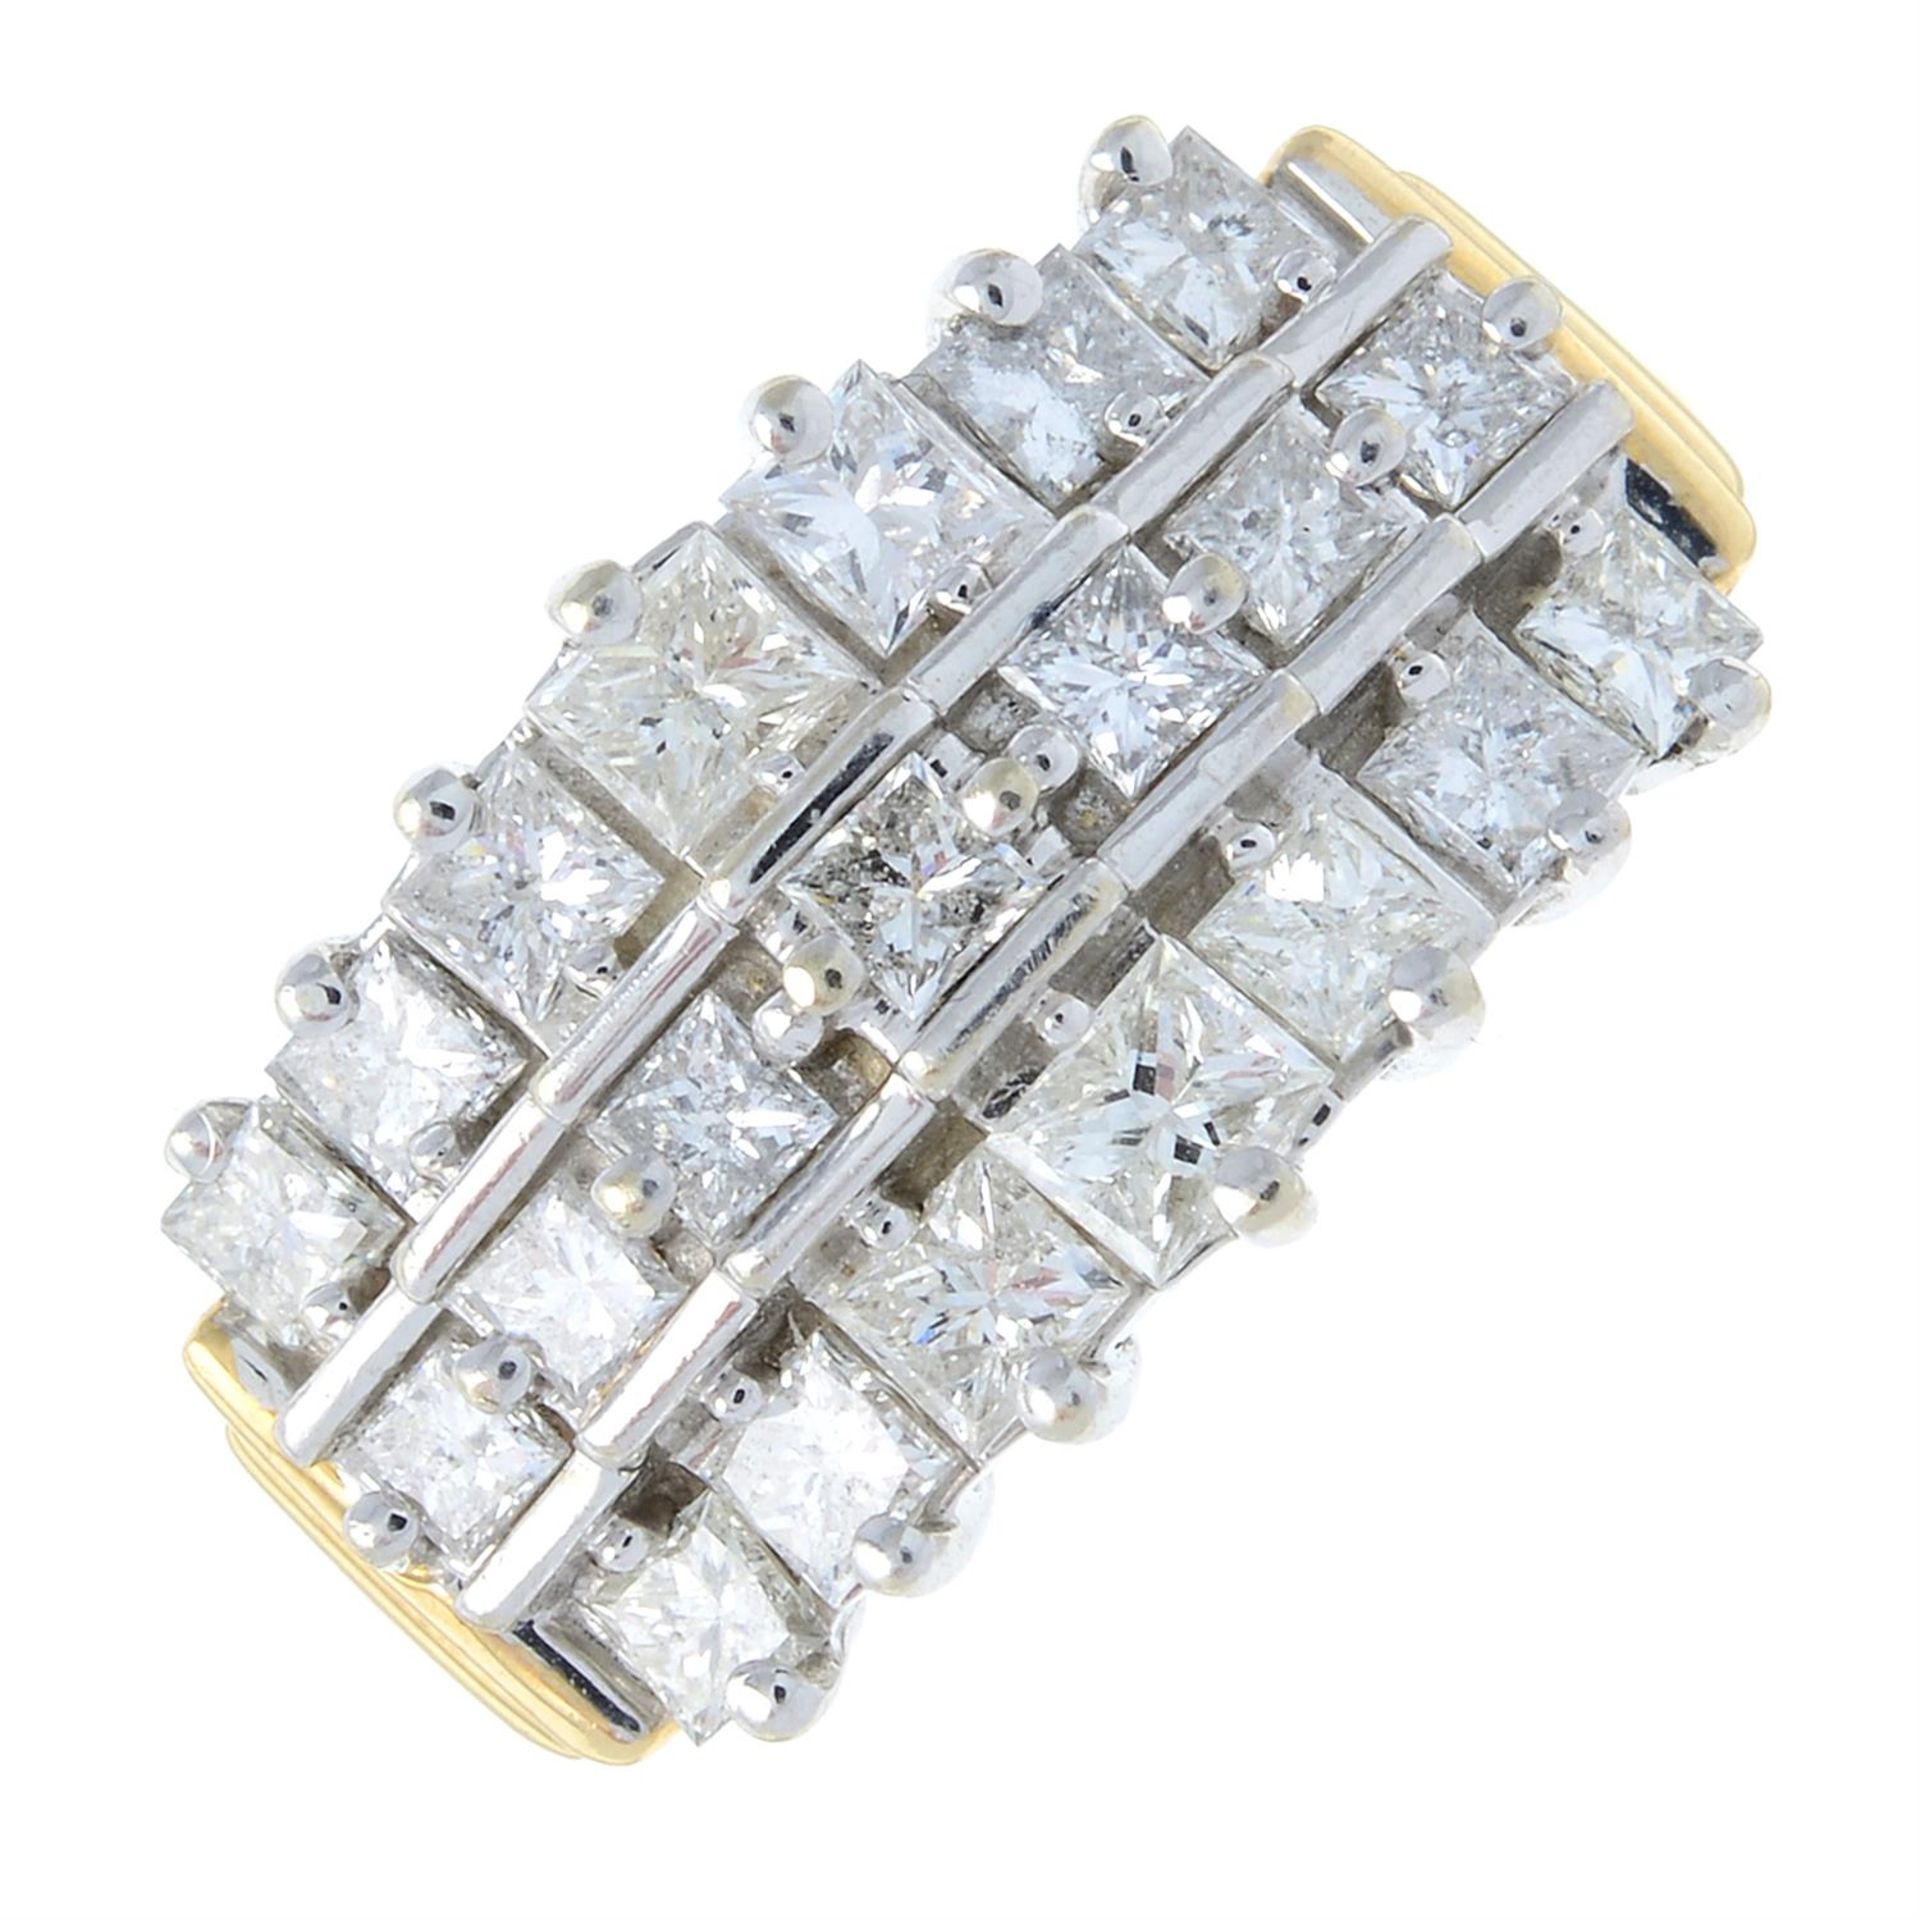 A 14ct gold square-cut diamond three-row dress ring.